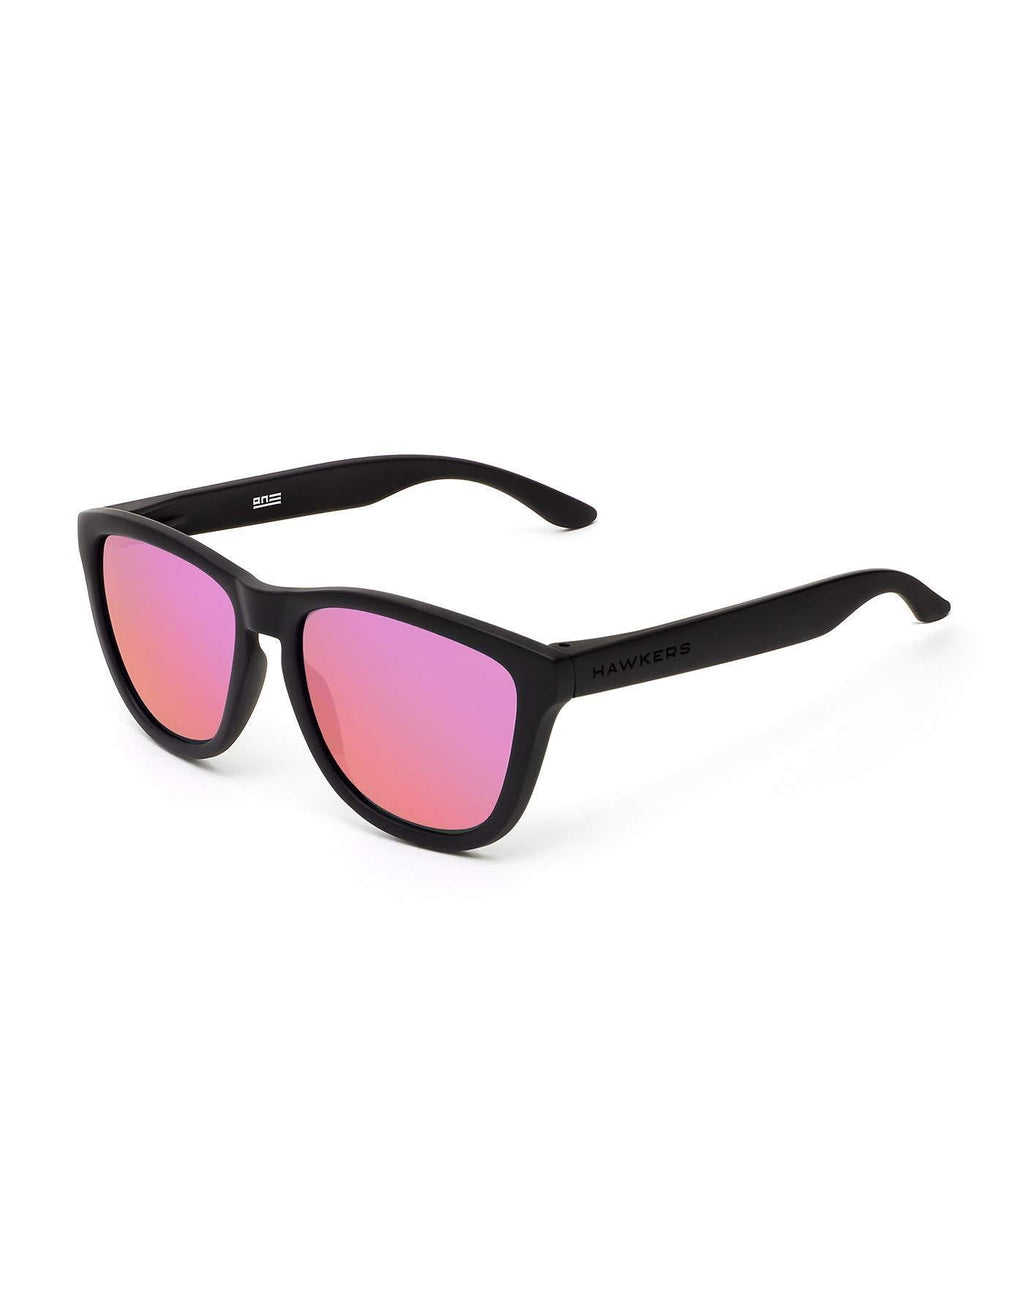 [Australia] - HAWKERS Women's Sunglasses, Black, One Size 